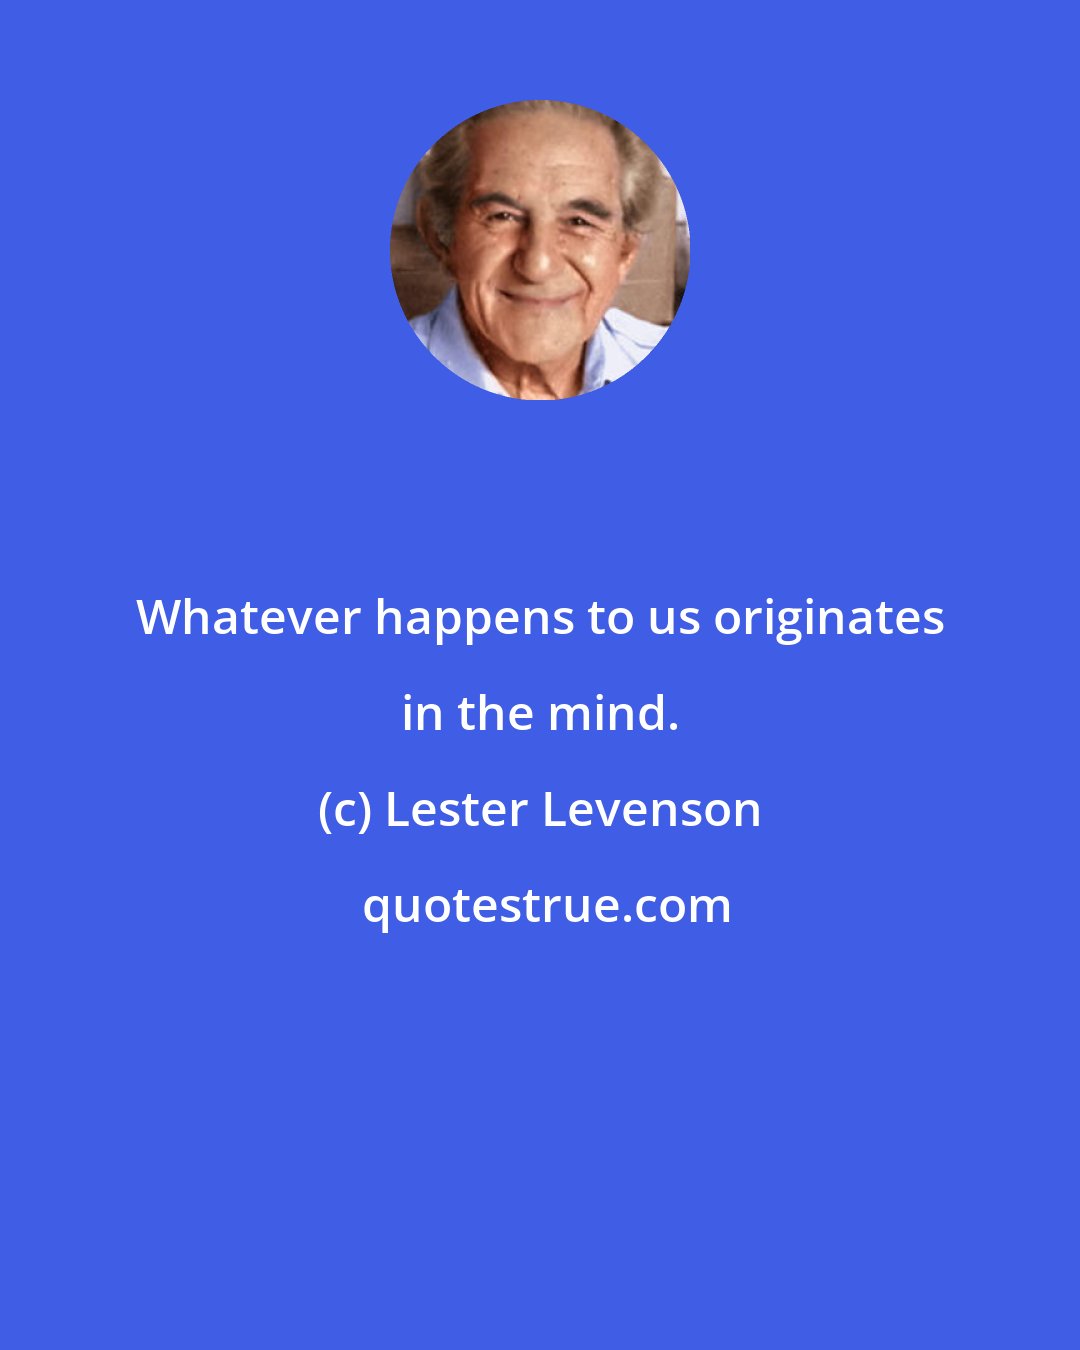 Lester Levenson: Whatever happens to us originates in the mind.